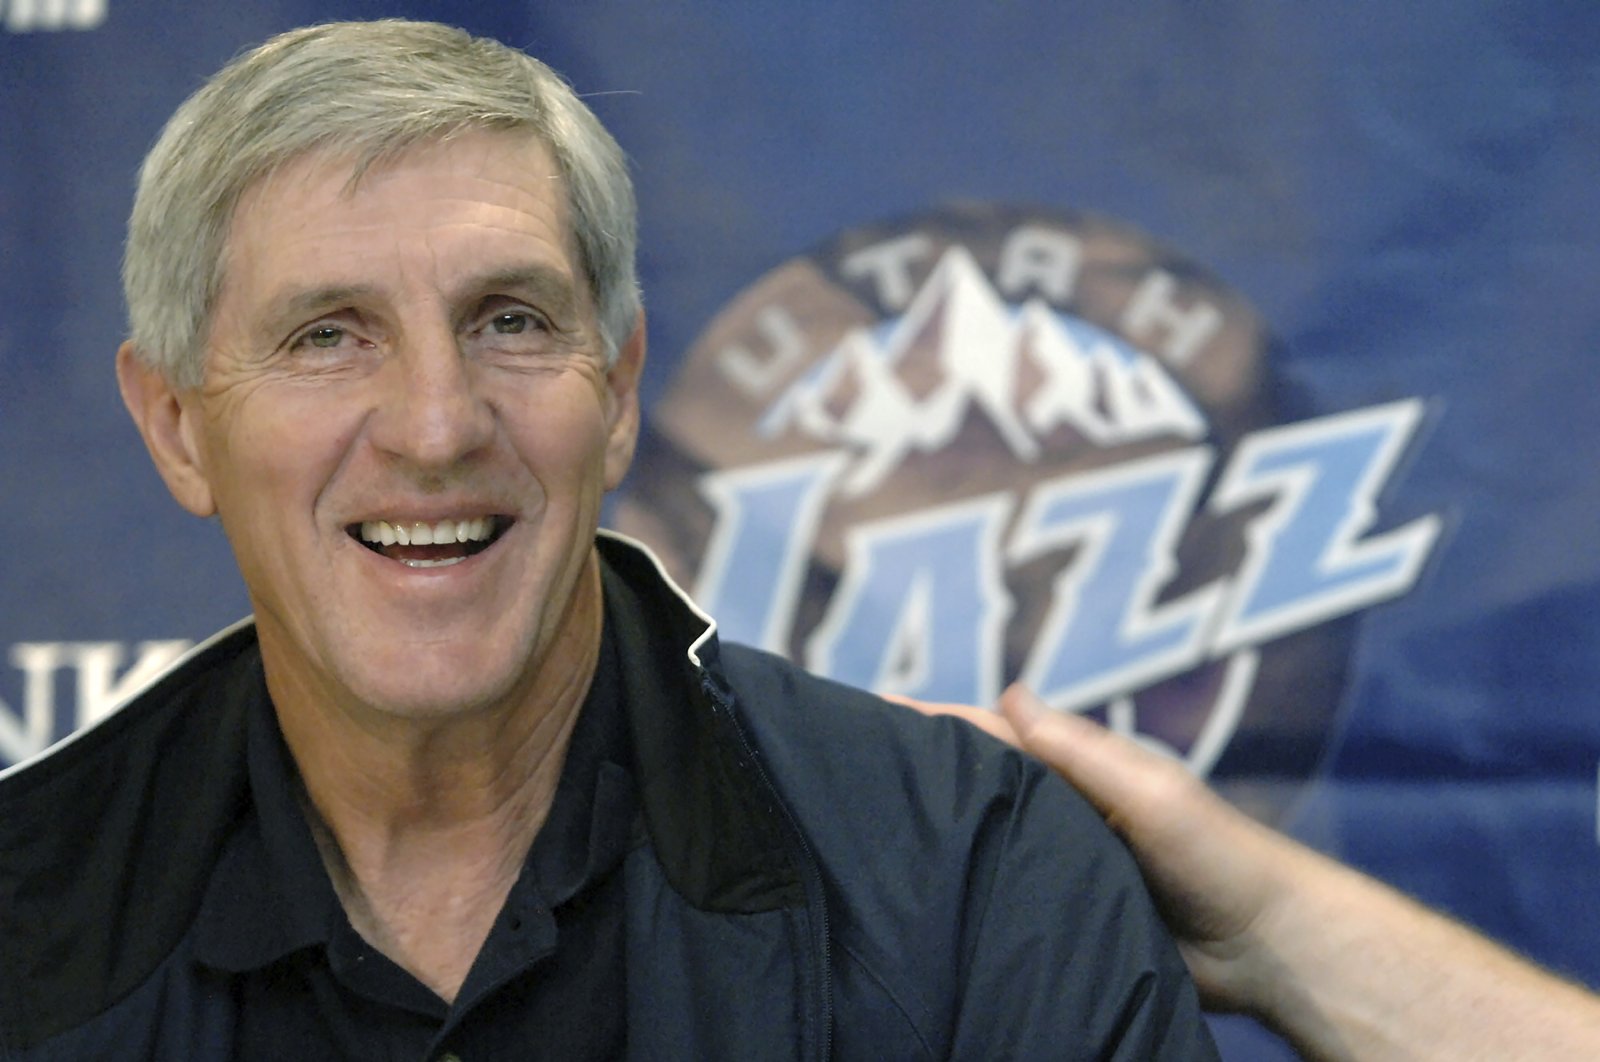 Utah Jazz coach Jerry Sloan smiles during a news conference in Salt Lake City, Utah, May 12, 2005. (AP Photo)